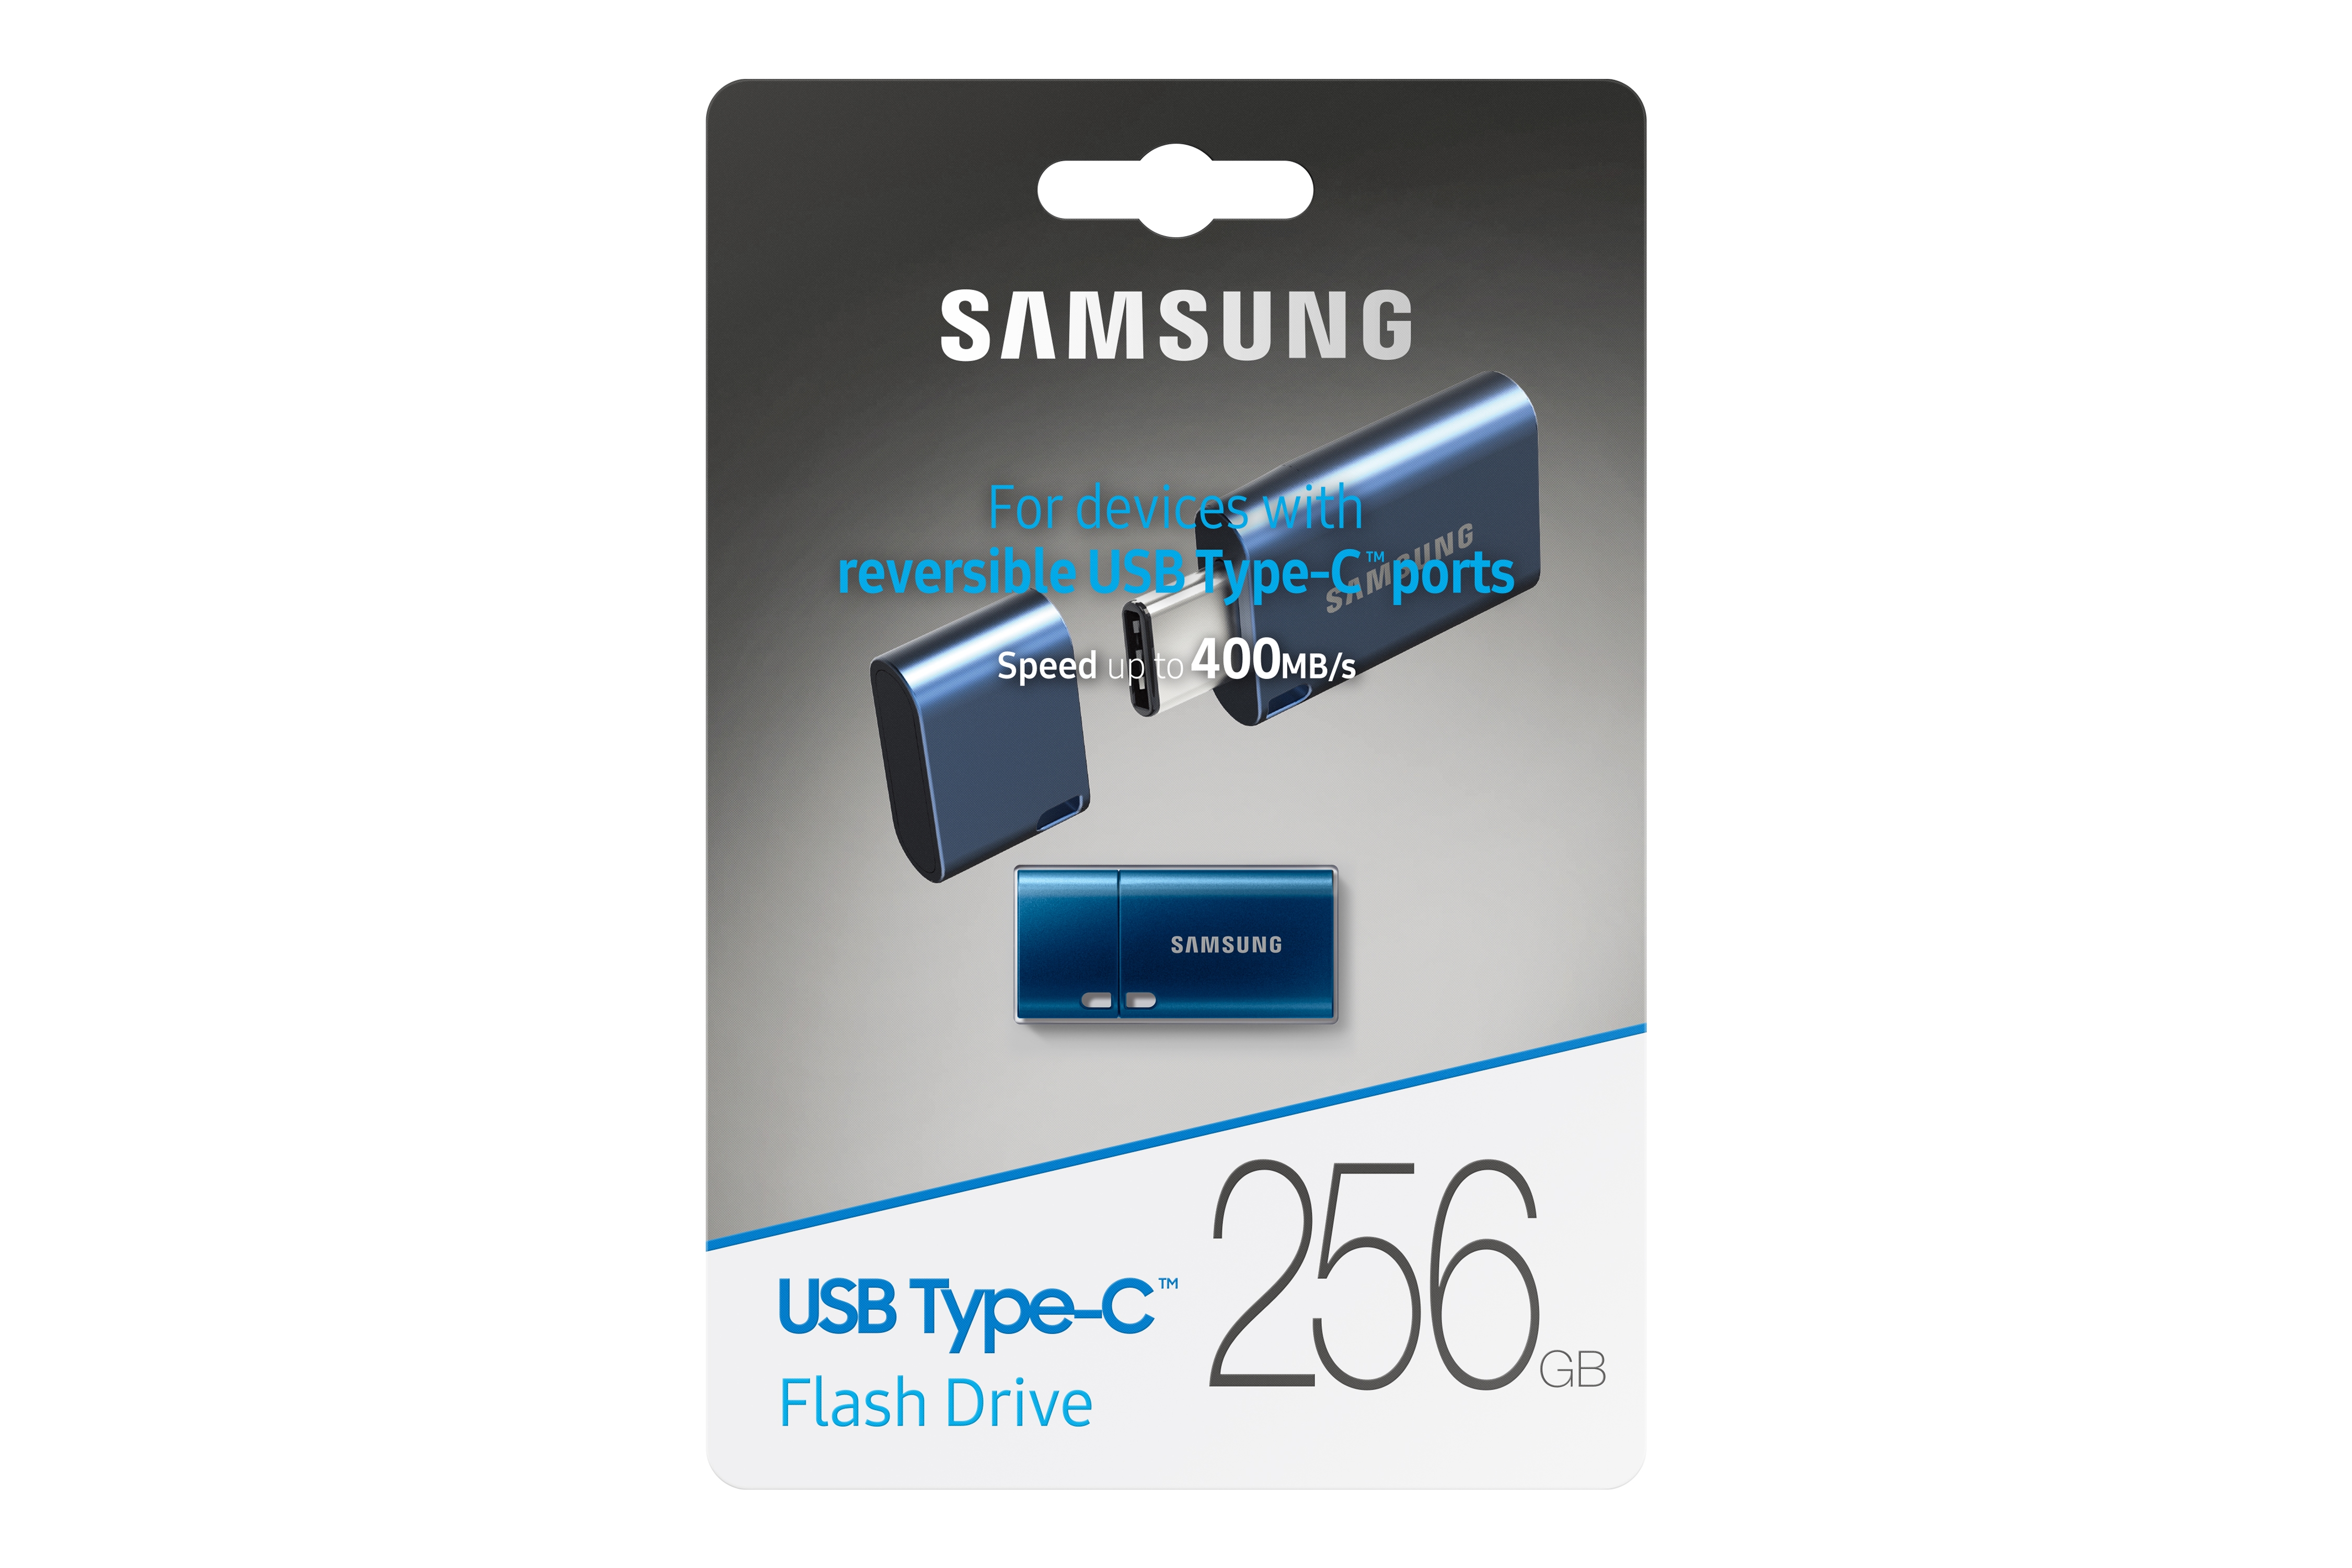 Thumbnail image of USB Type-C&trade; Flash Drive 256GB (MUF-256DA/AM)